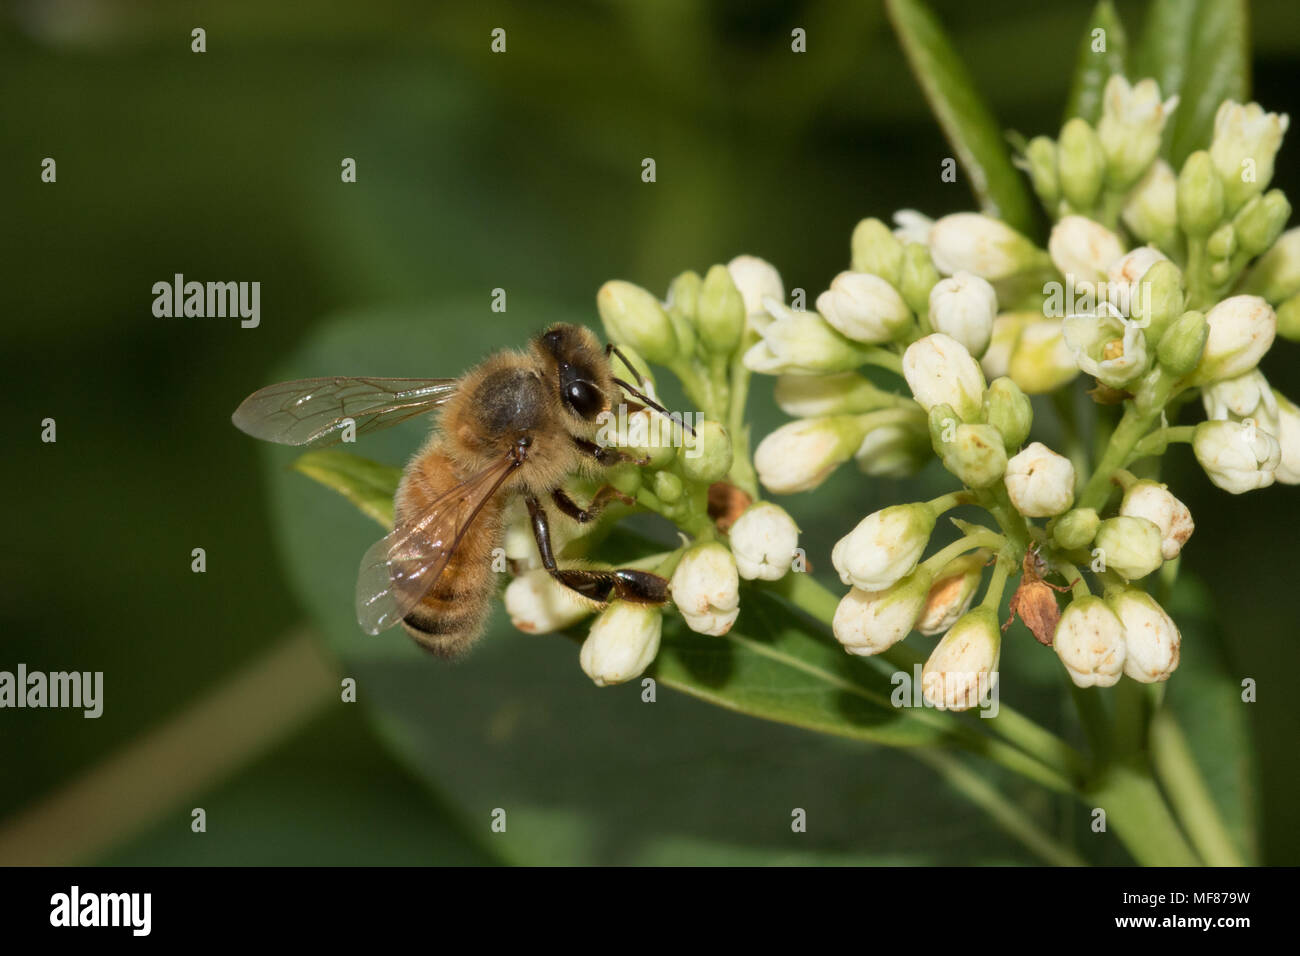 A honey bee feeding on milkweed blossoms Stock Photo - Alamy